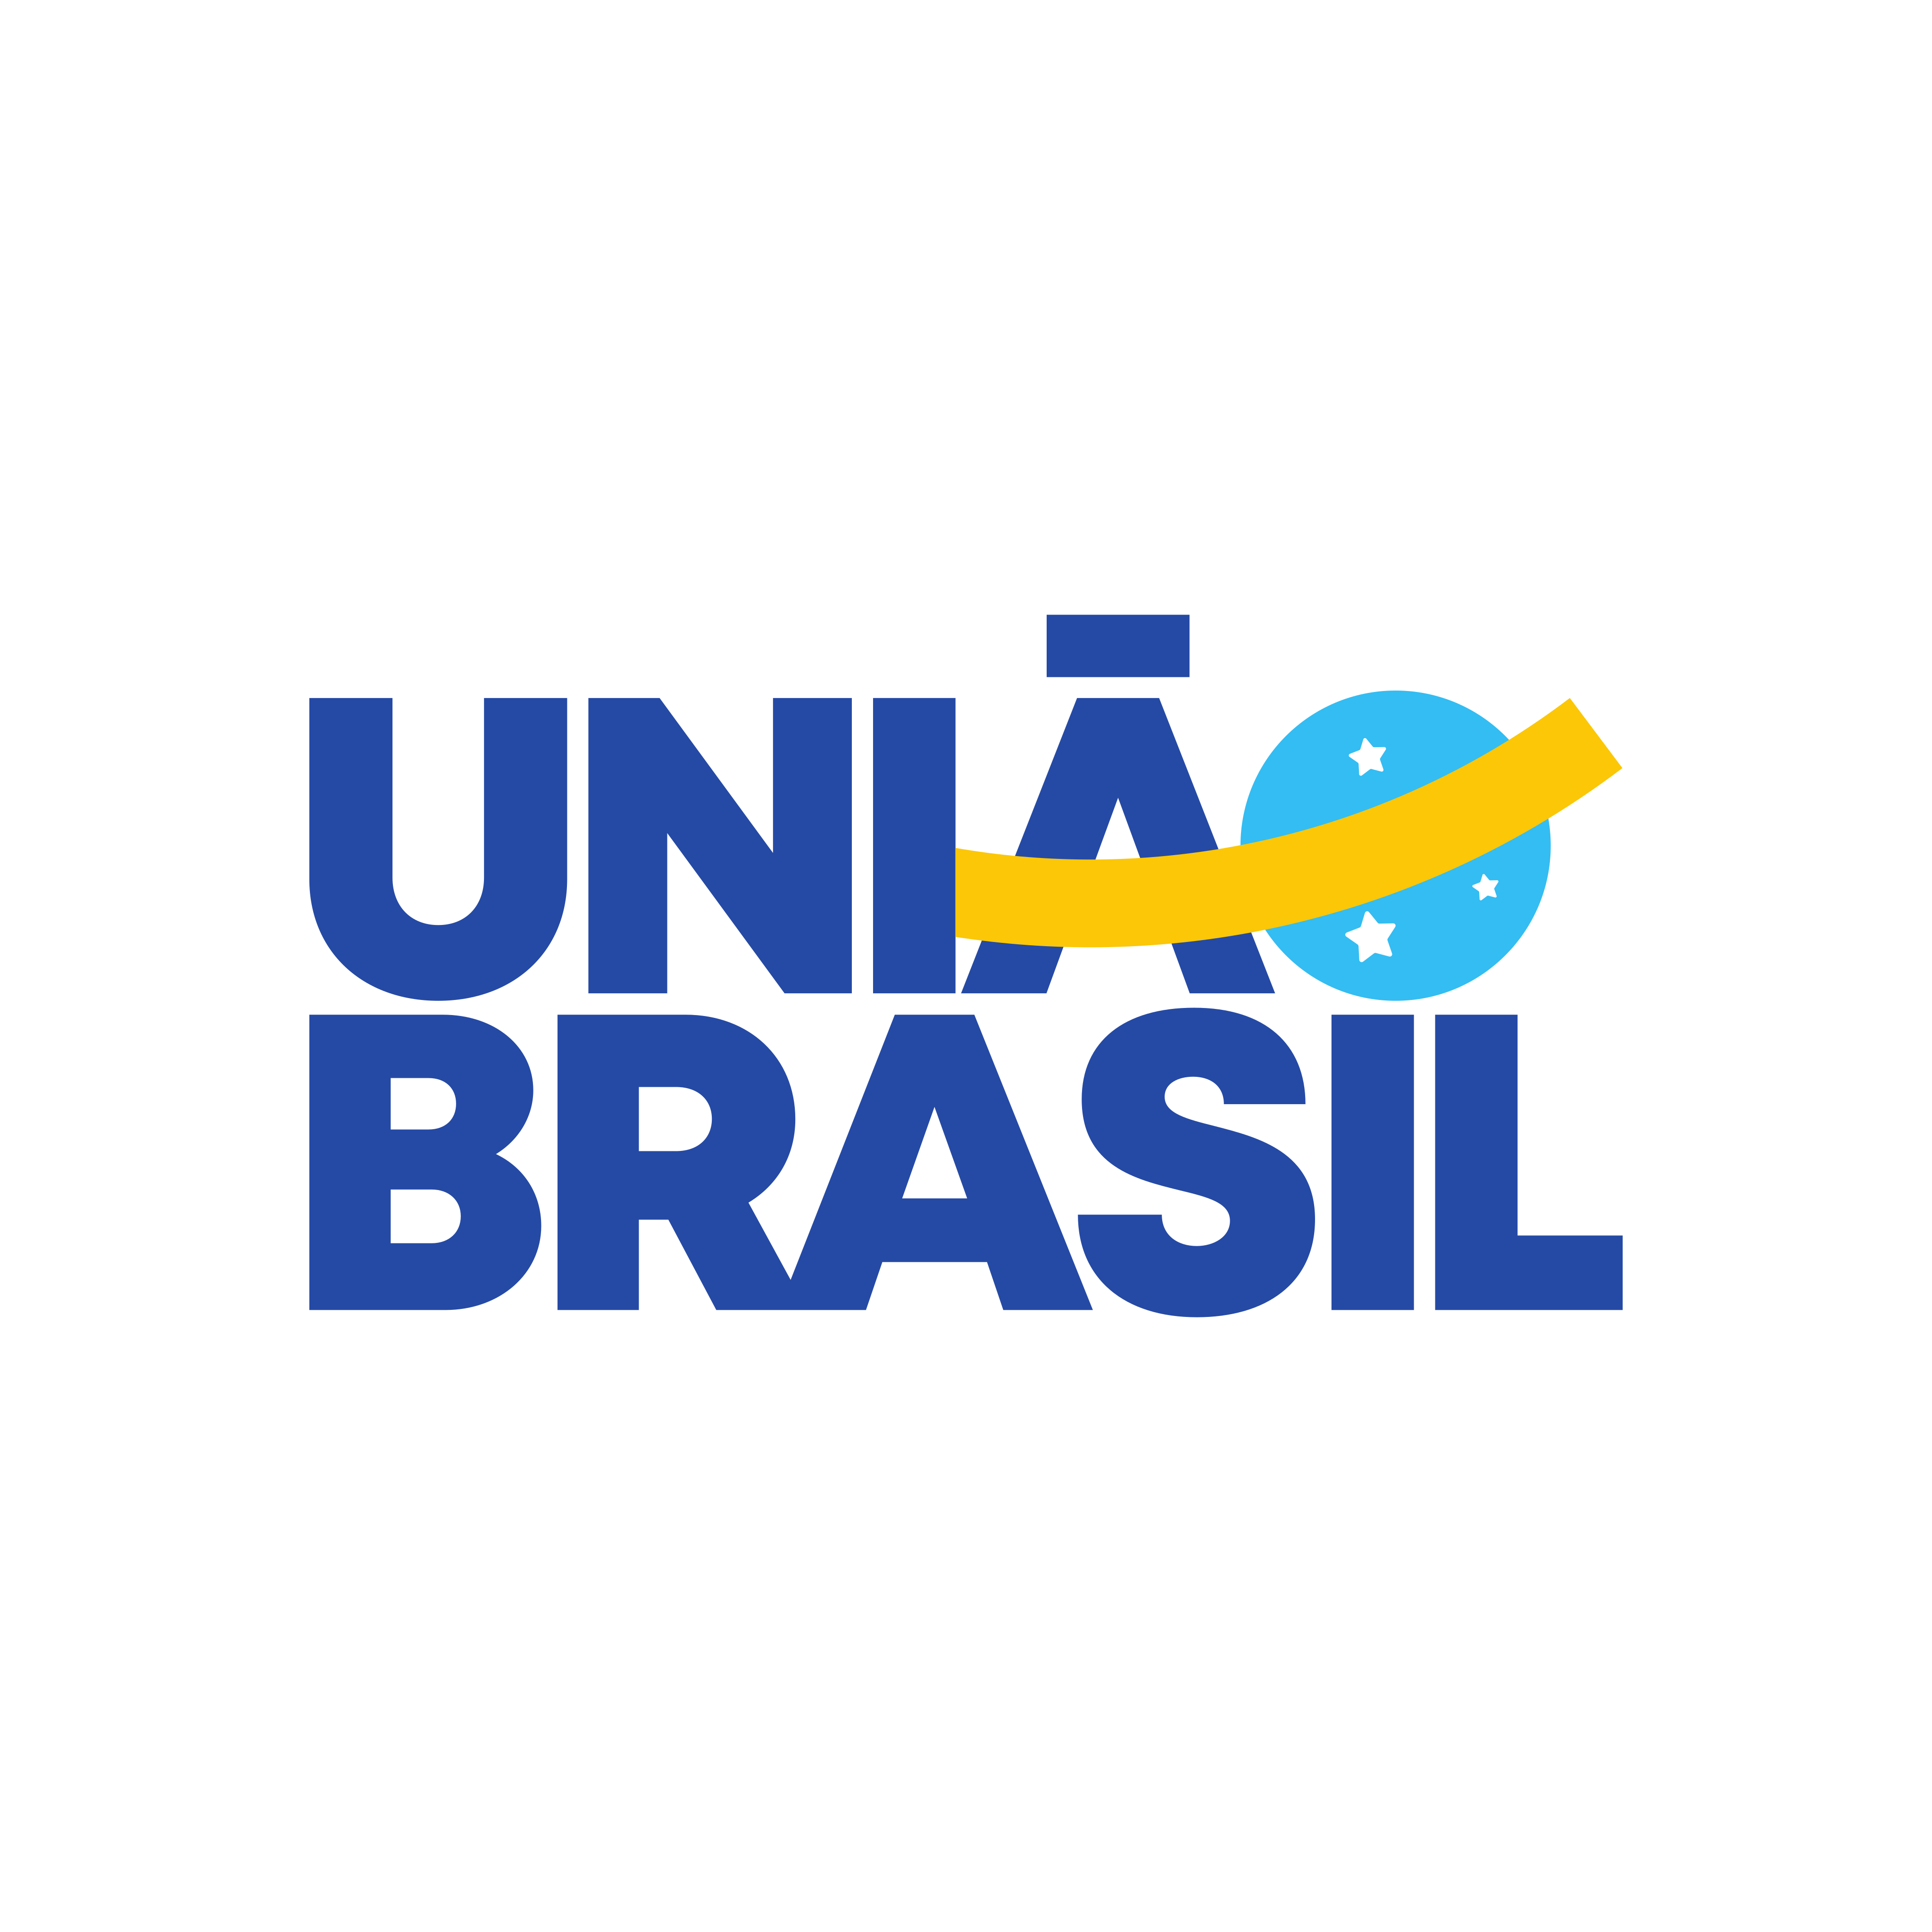 uniao brasil logo 0 - União Brasil Logo